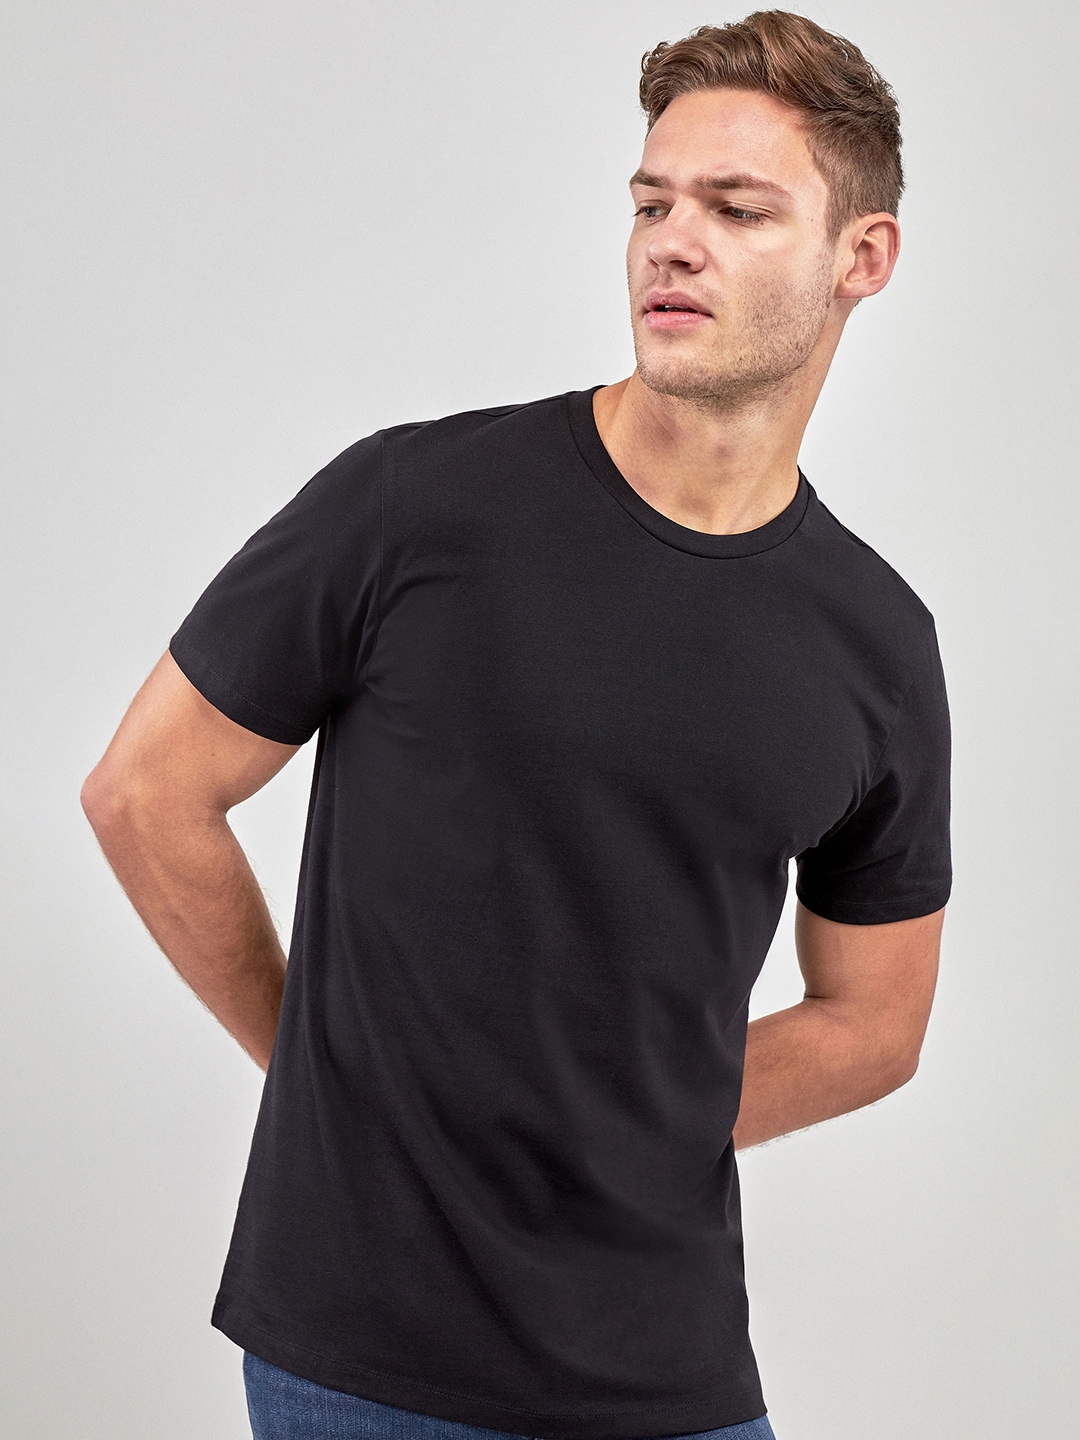 Buy Next Men Black Solid Round Neck T Shirt Tshirts For Men